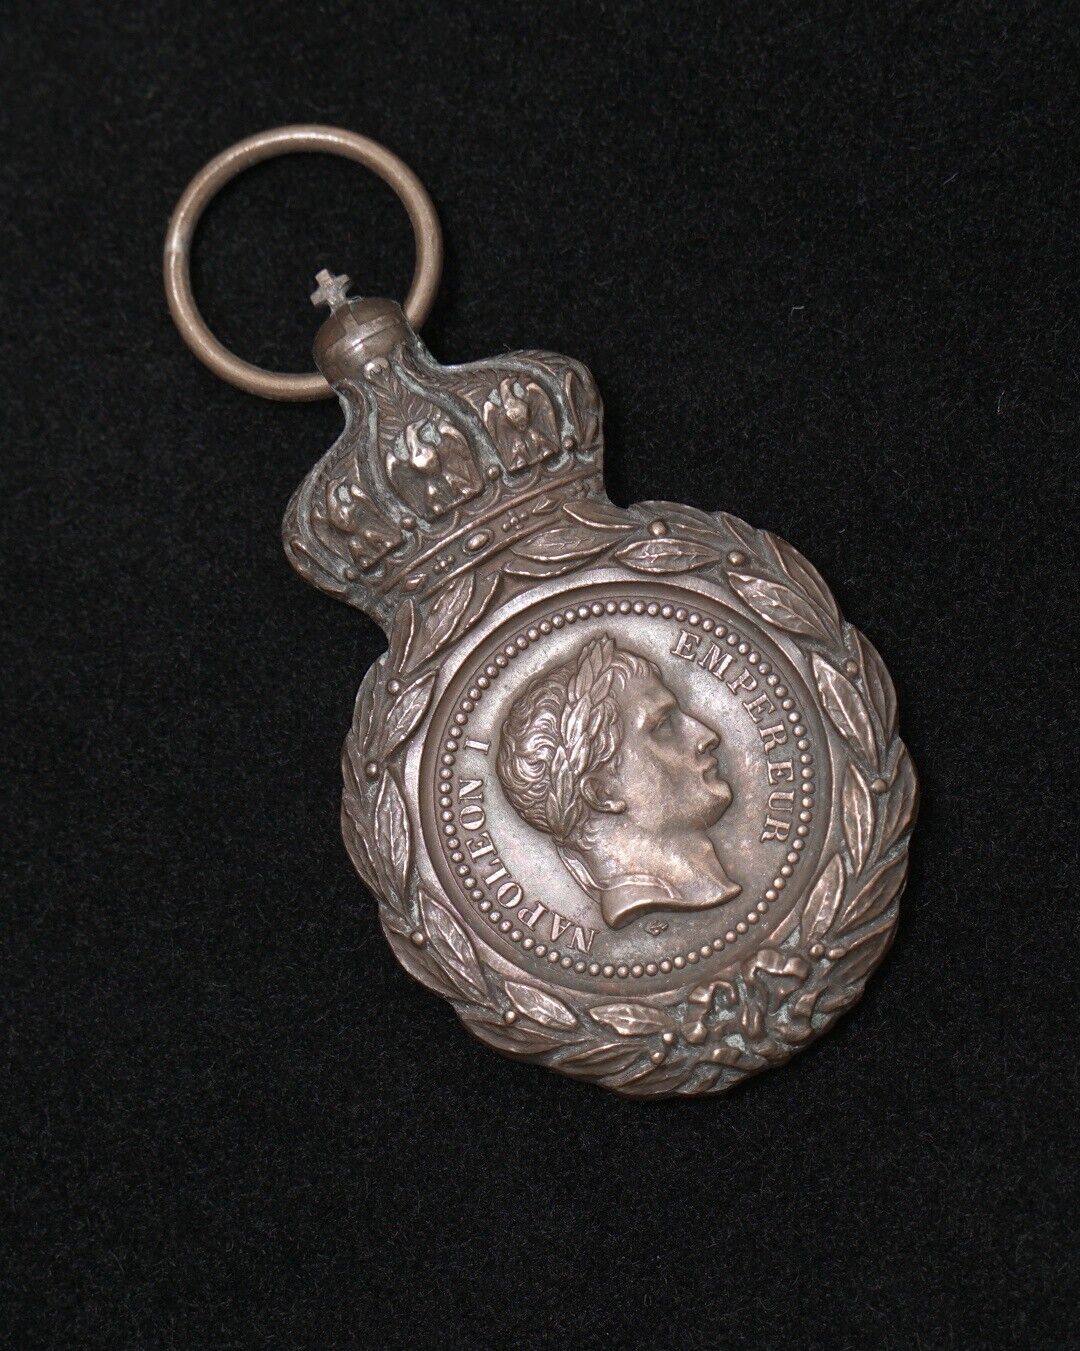 Original French Saint Helena Medal, Napoleonic Wars 1792-1815 Campaigns